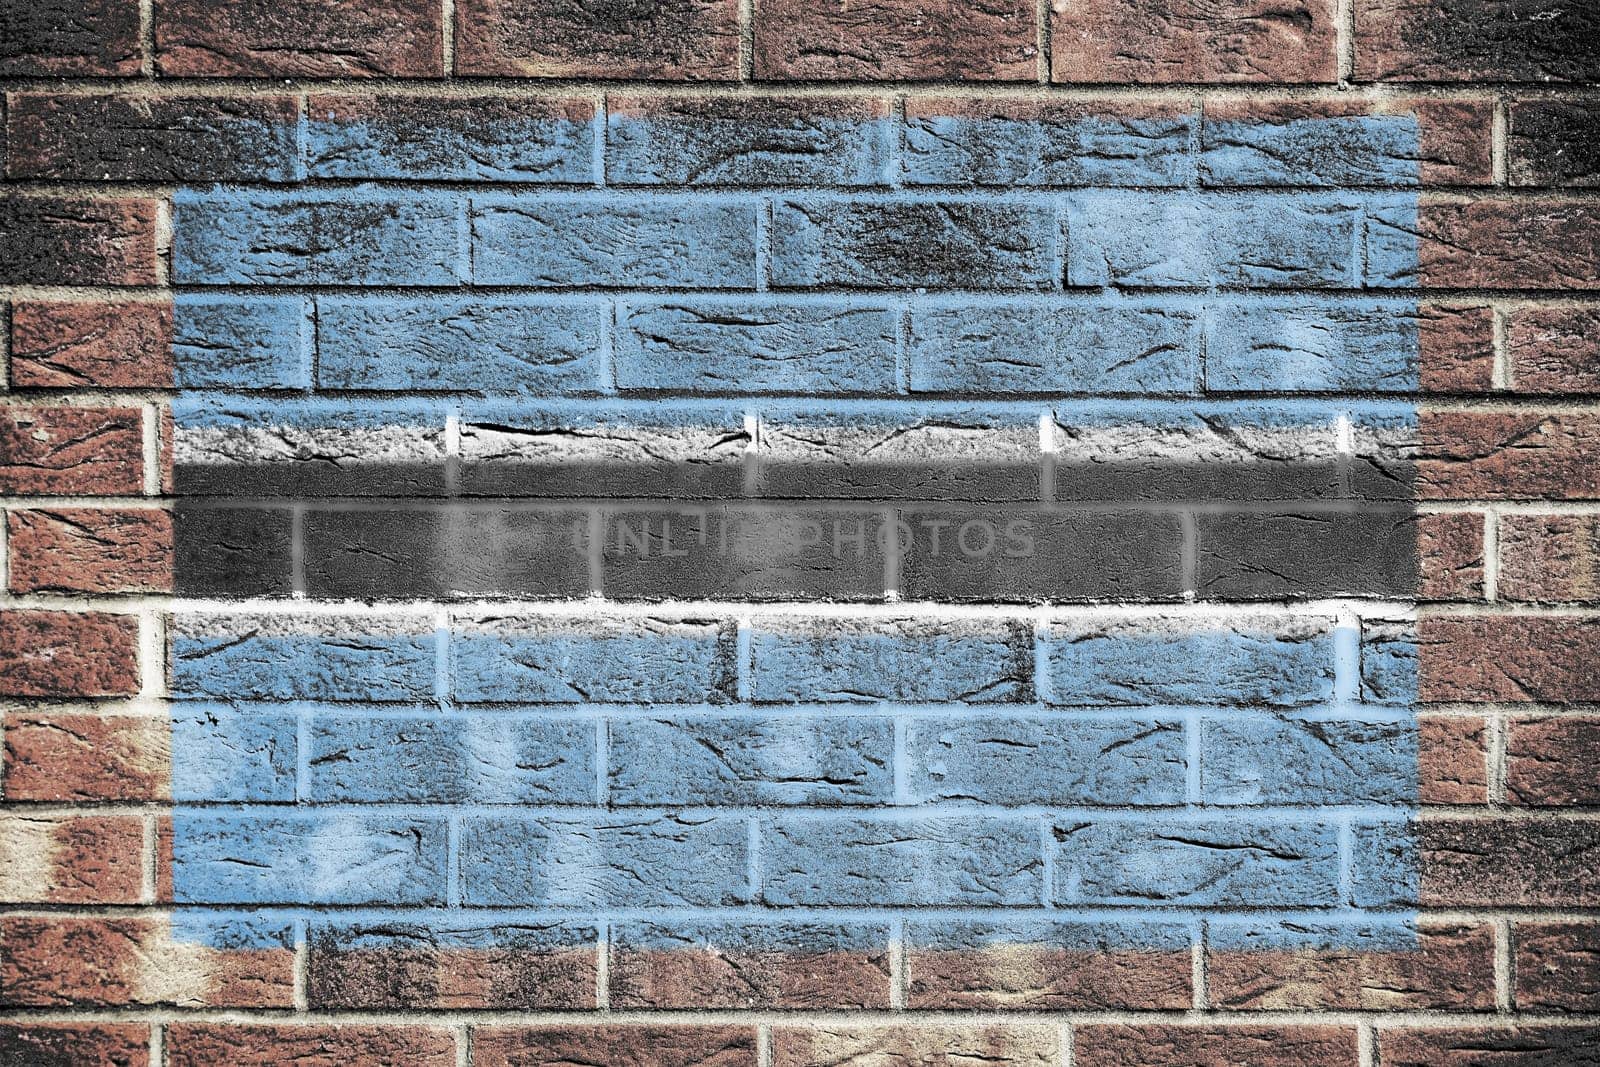 A Botswana flag on brick wall background